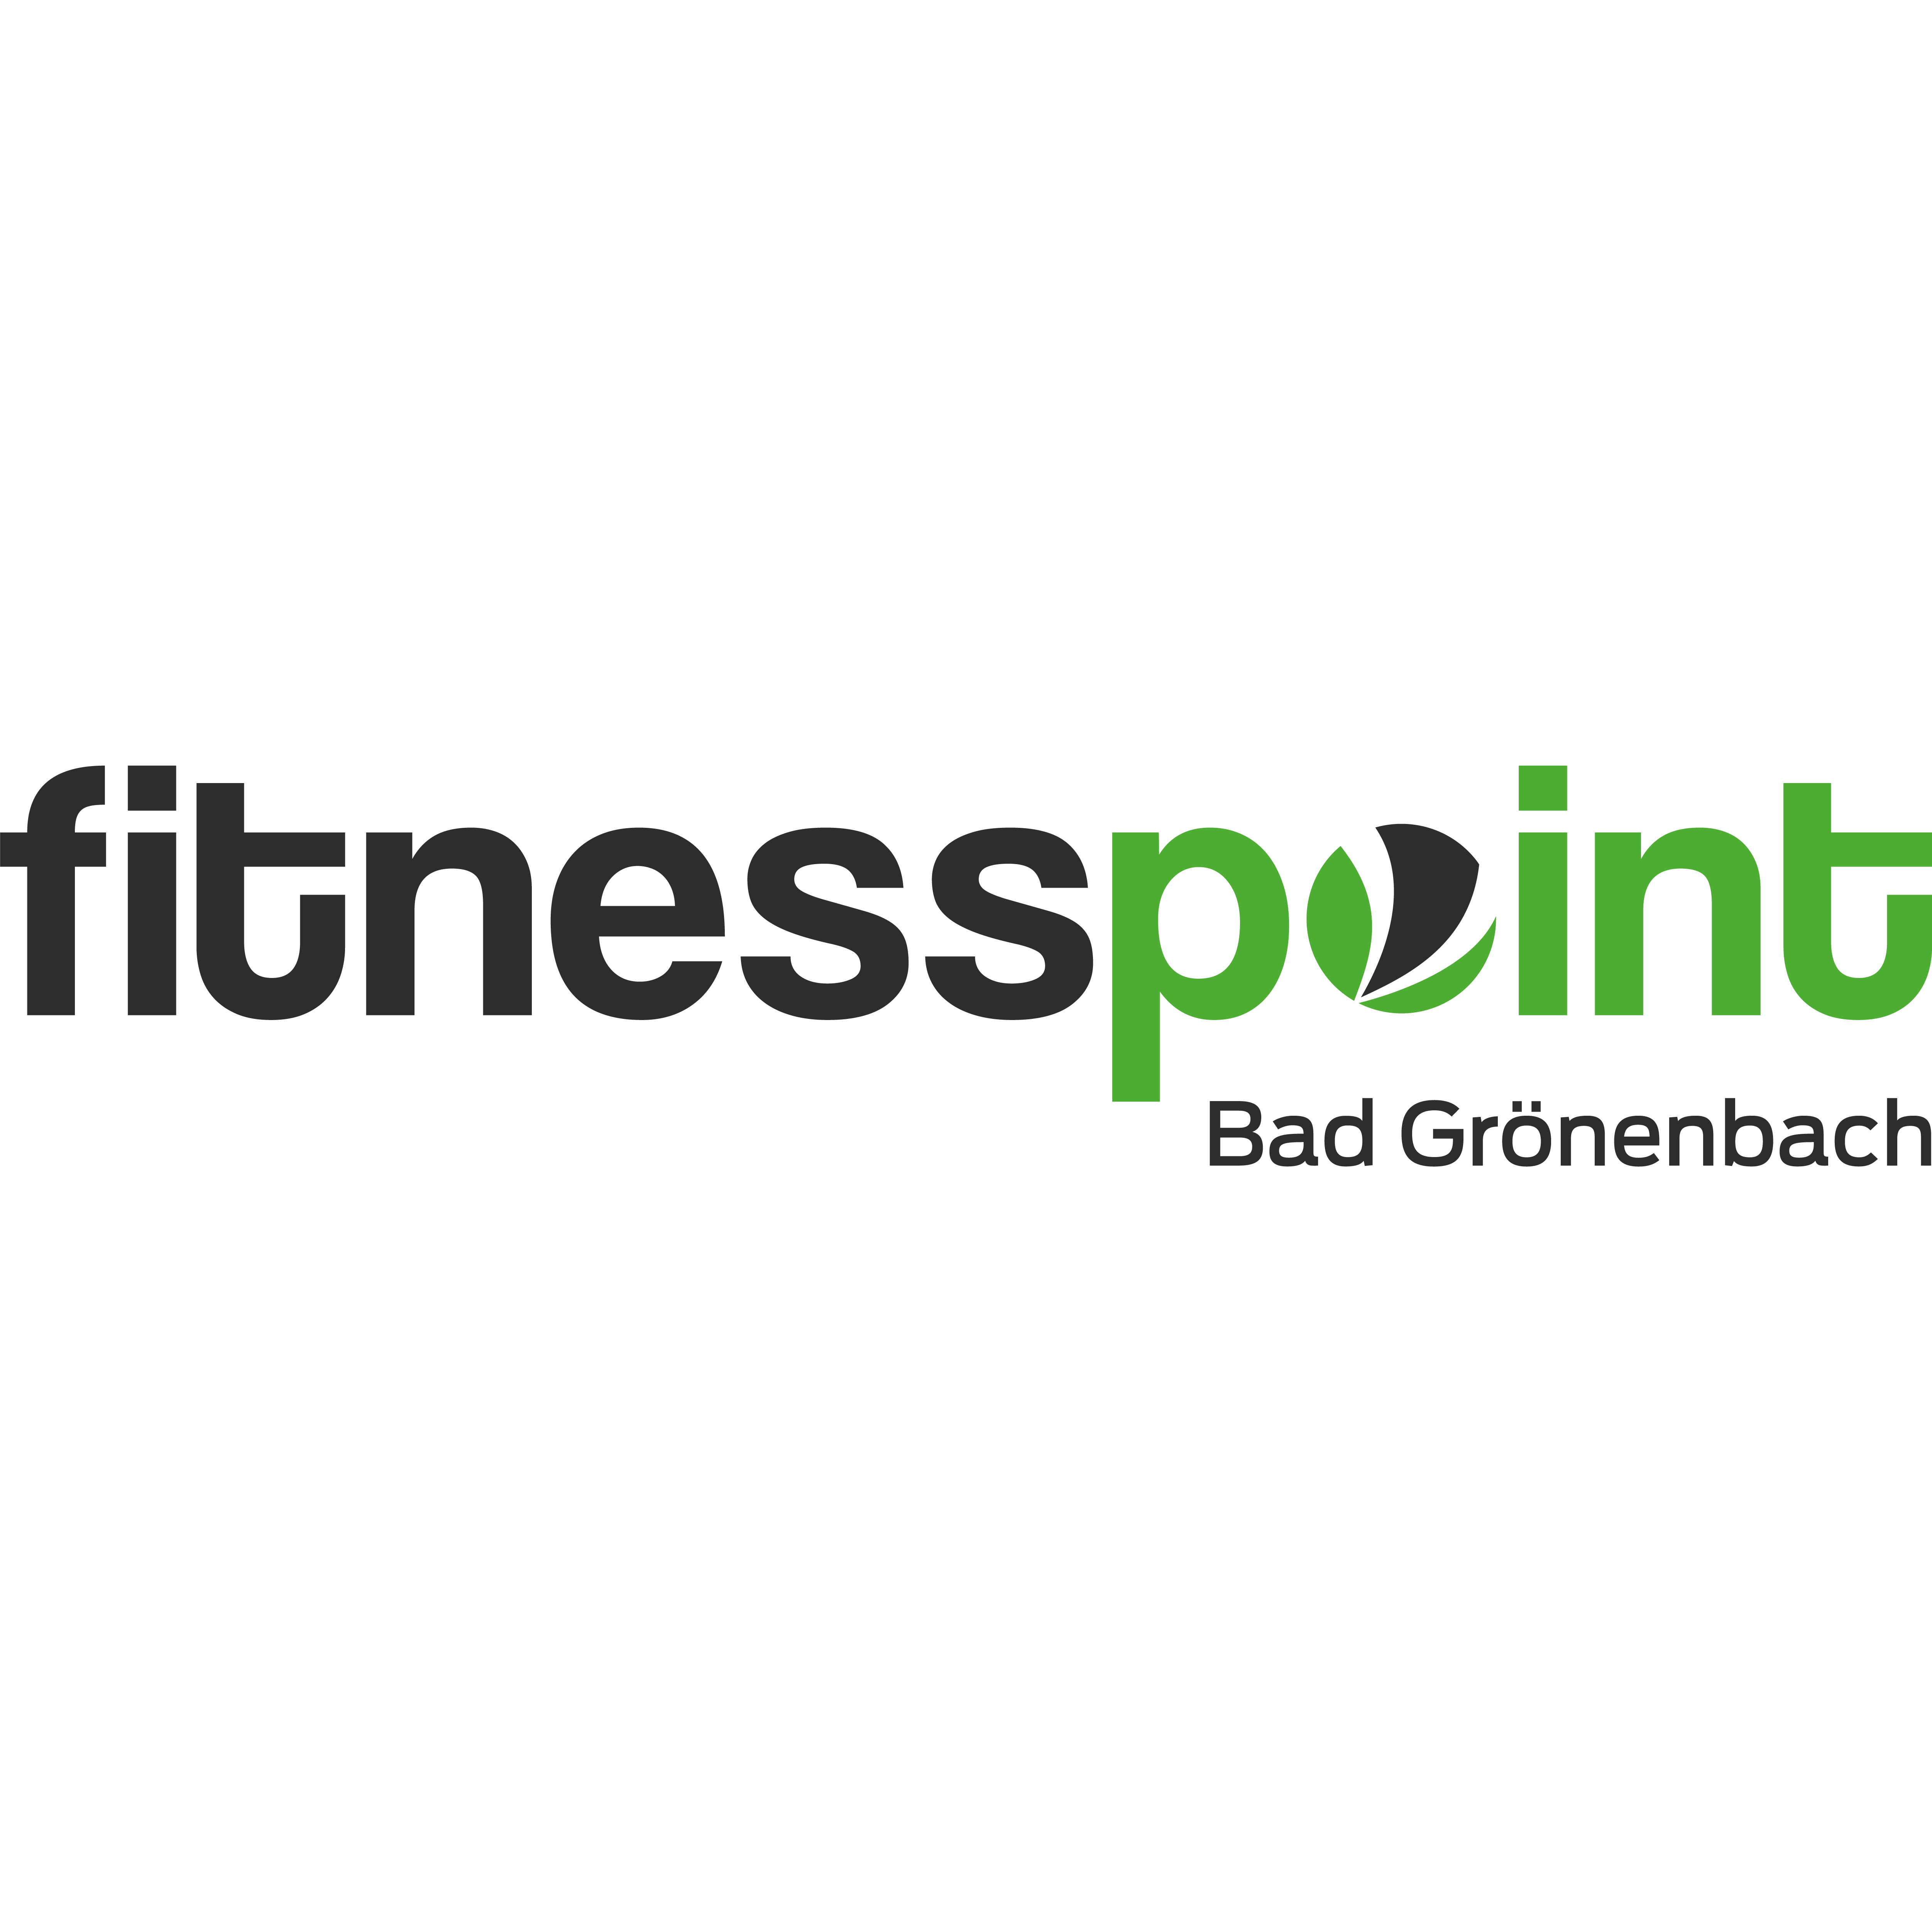 Fitnesspoint Bad Grönenbach in Bad Grönenbach - Logo